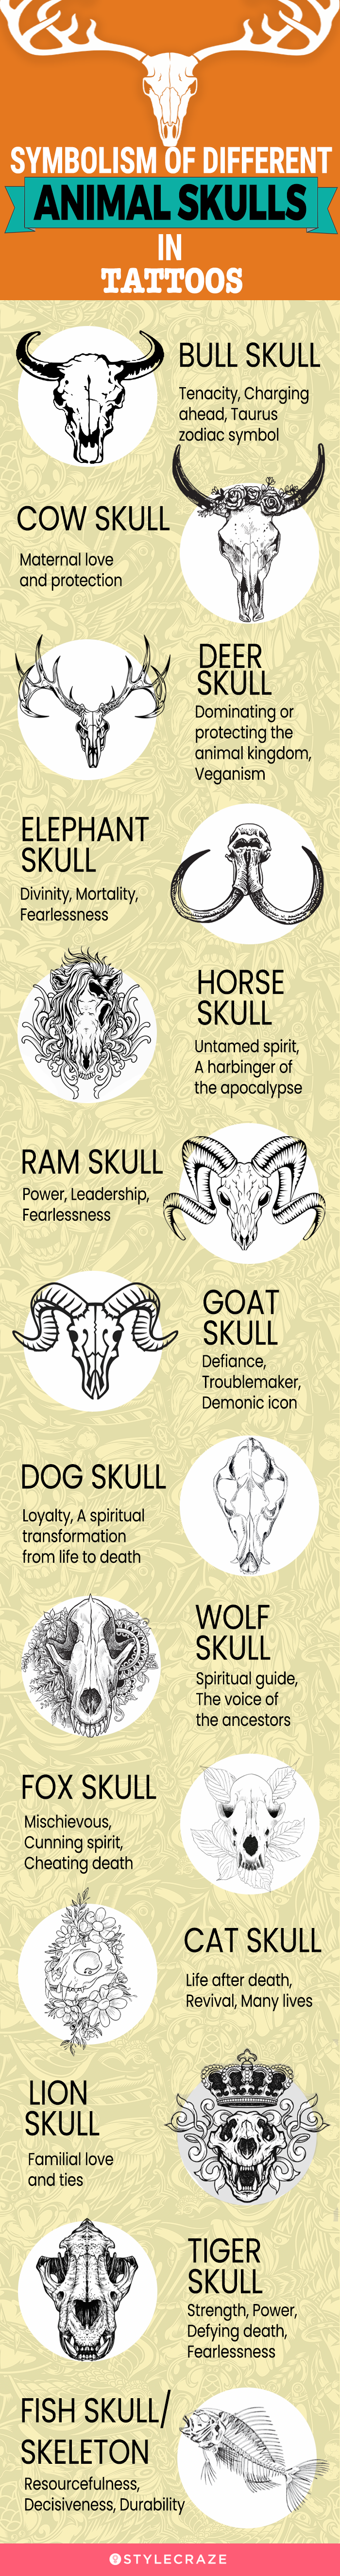 symbolism of different animal skulls in tattoos (infographic)